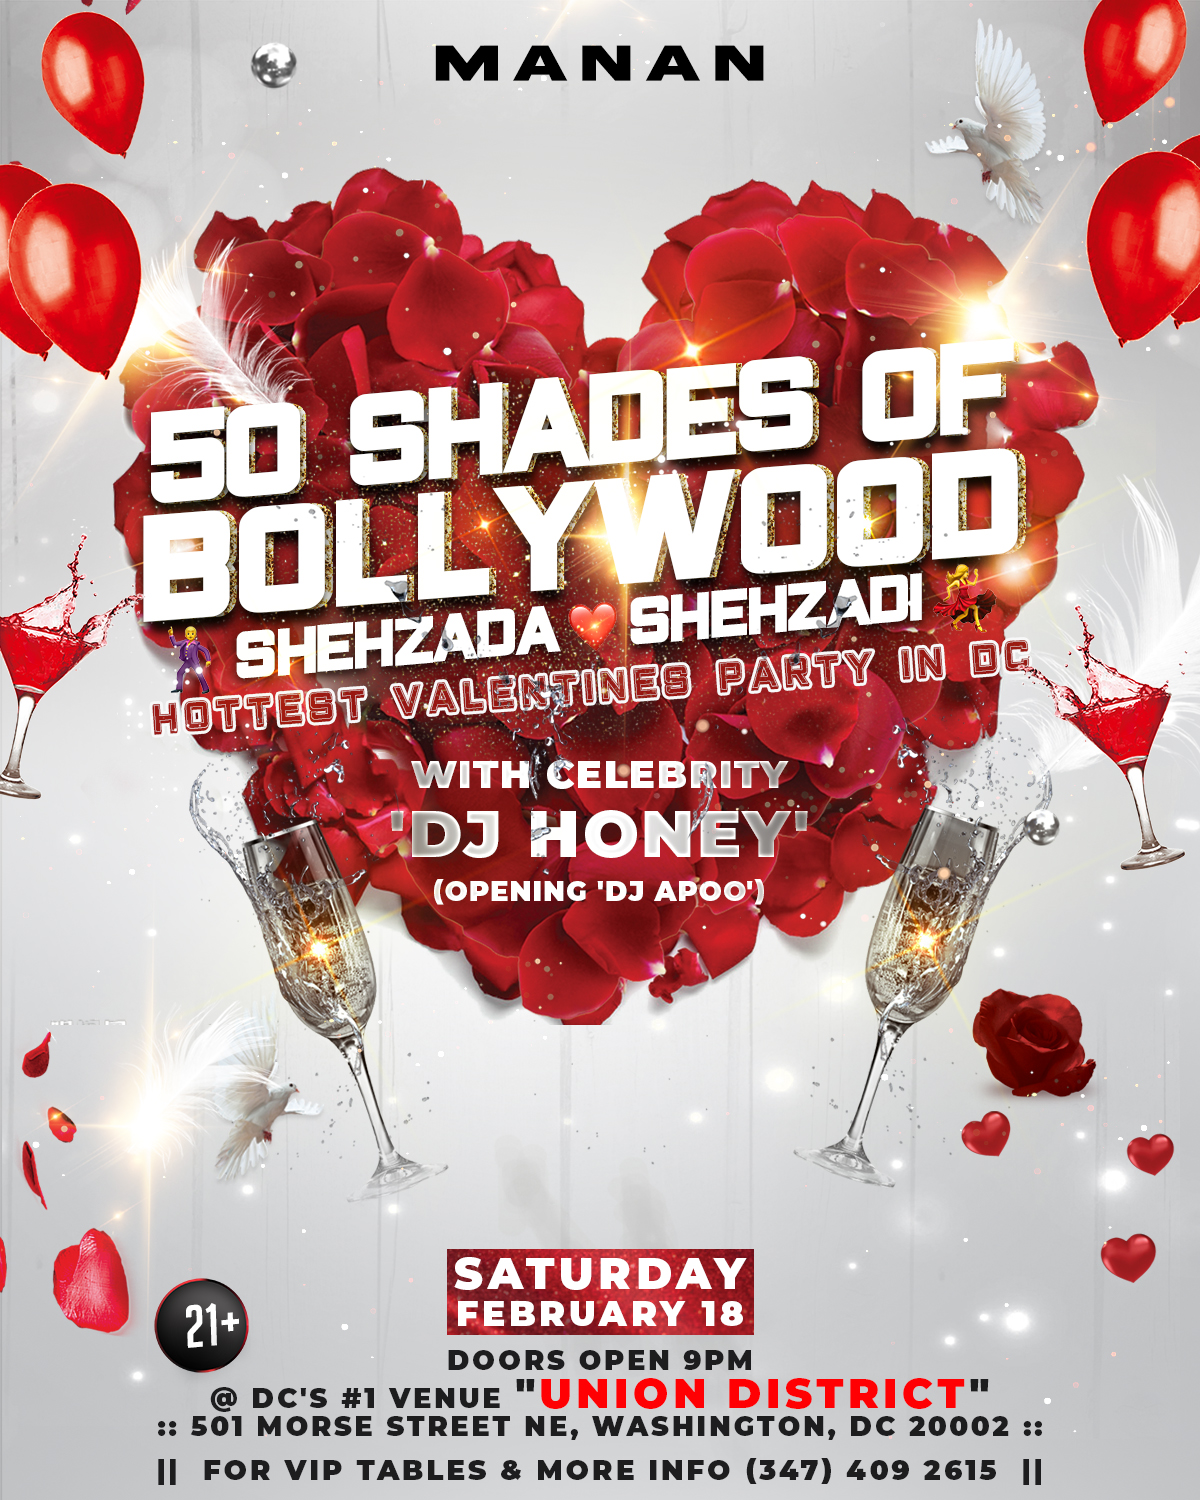 Manan Singh Katohora PRESENTS Hottest Valentines Party IN DC -- "50 SHADES OF BOLLYWOOD" -- Shehzada & Shehzadi -- Featuring Celebrity 'DJ HONEY' (Opening 'DJ APOO')